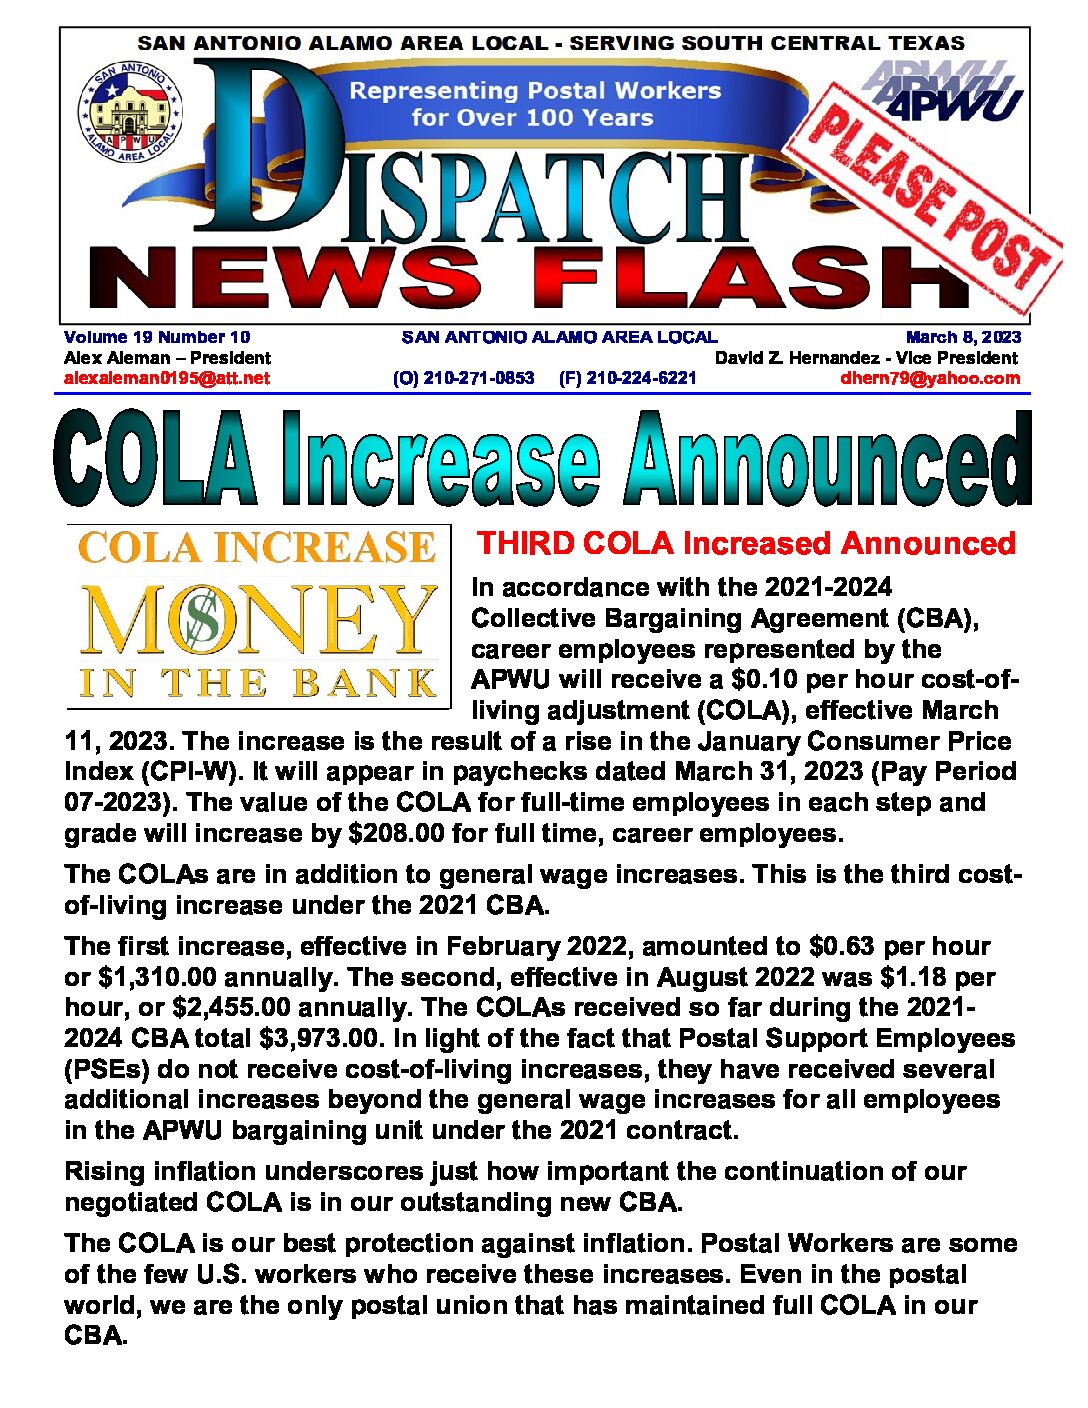 NewsFlash 19-10  COLA Increase Announced - 